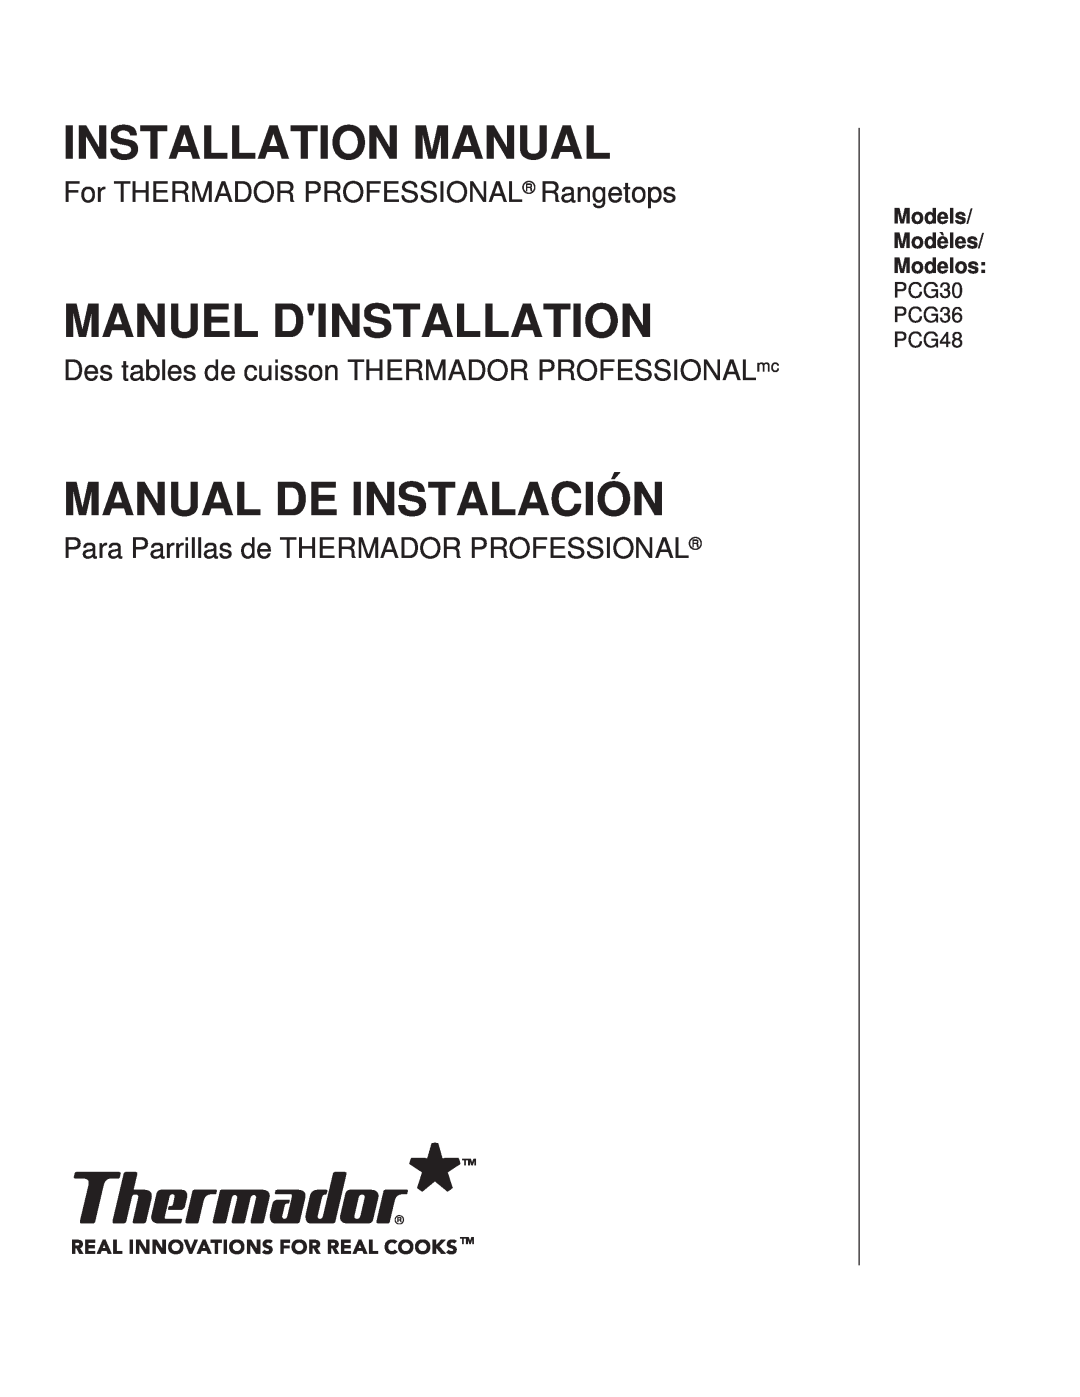 Thermador PCG48, PCG36, PCG30 installation manual Installation Manual, Manuel Dinstallation, Manual De Instalación 